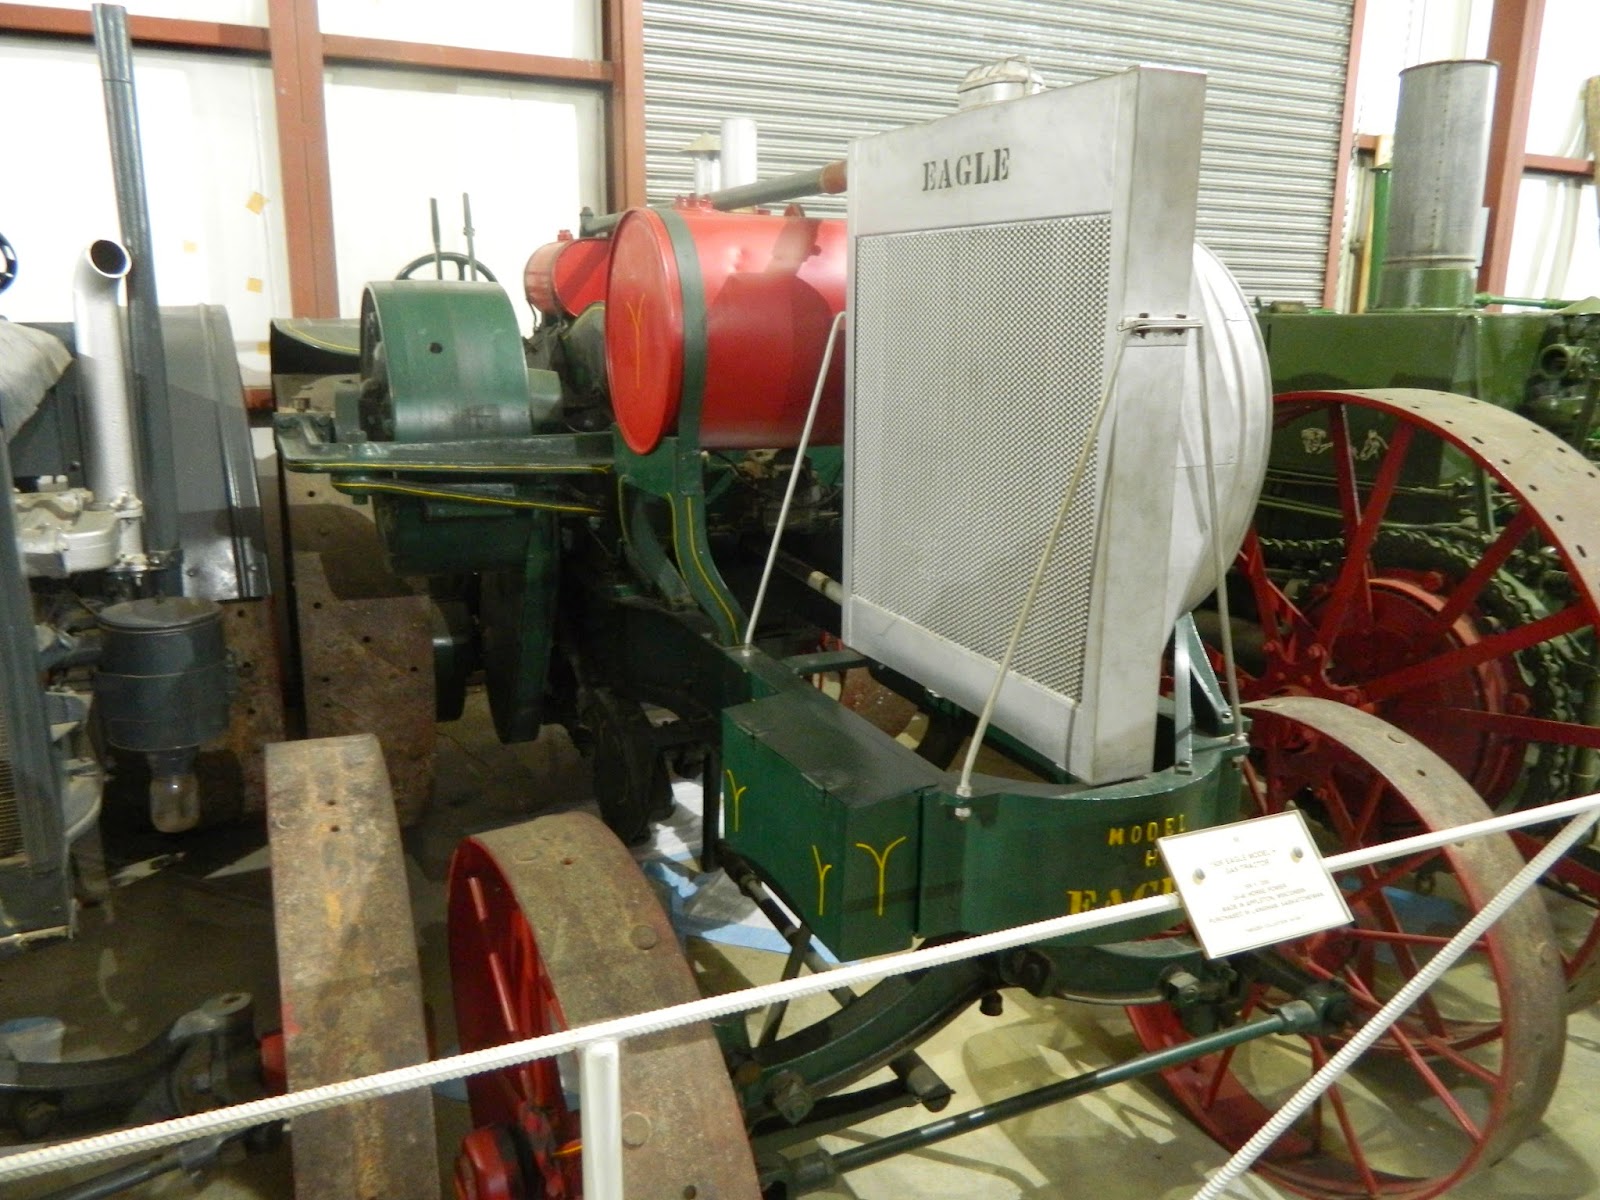 Stuhr Museum of the Prairie Pioneer's Tractors